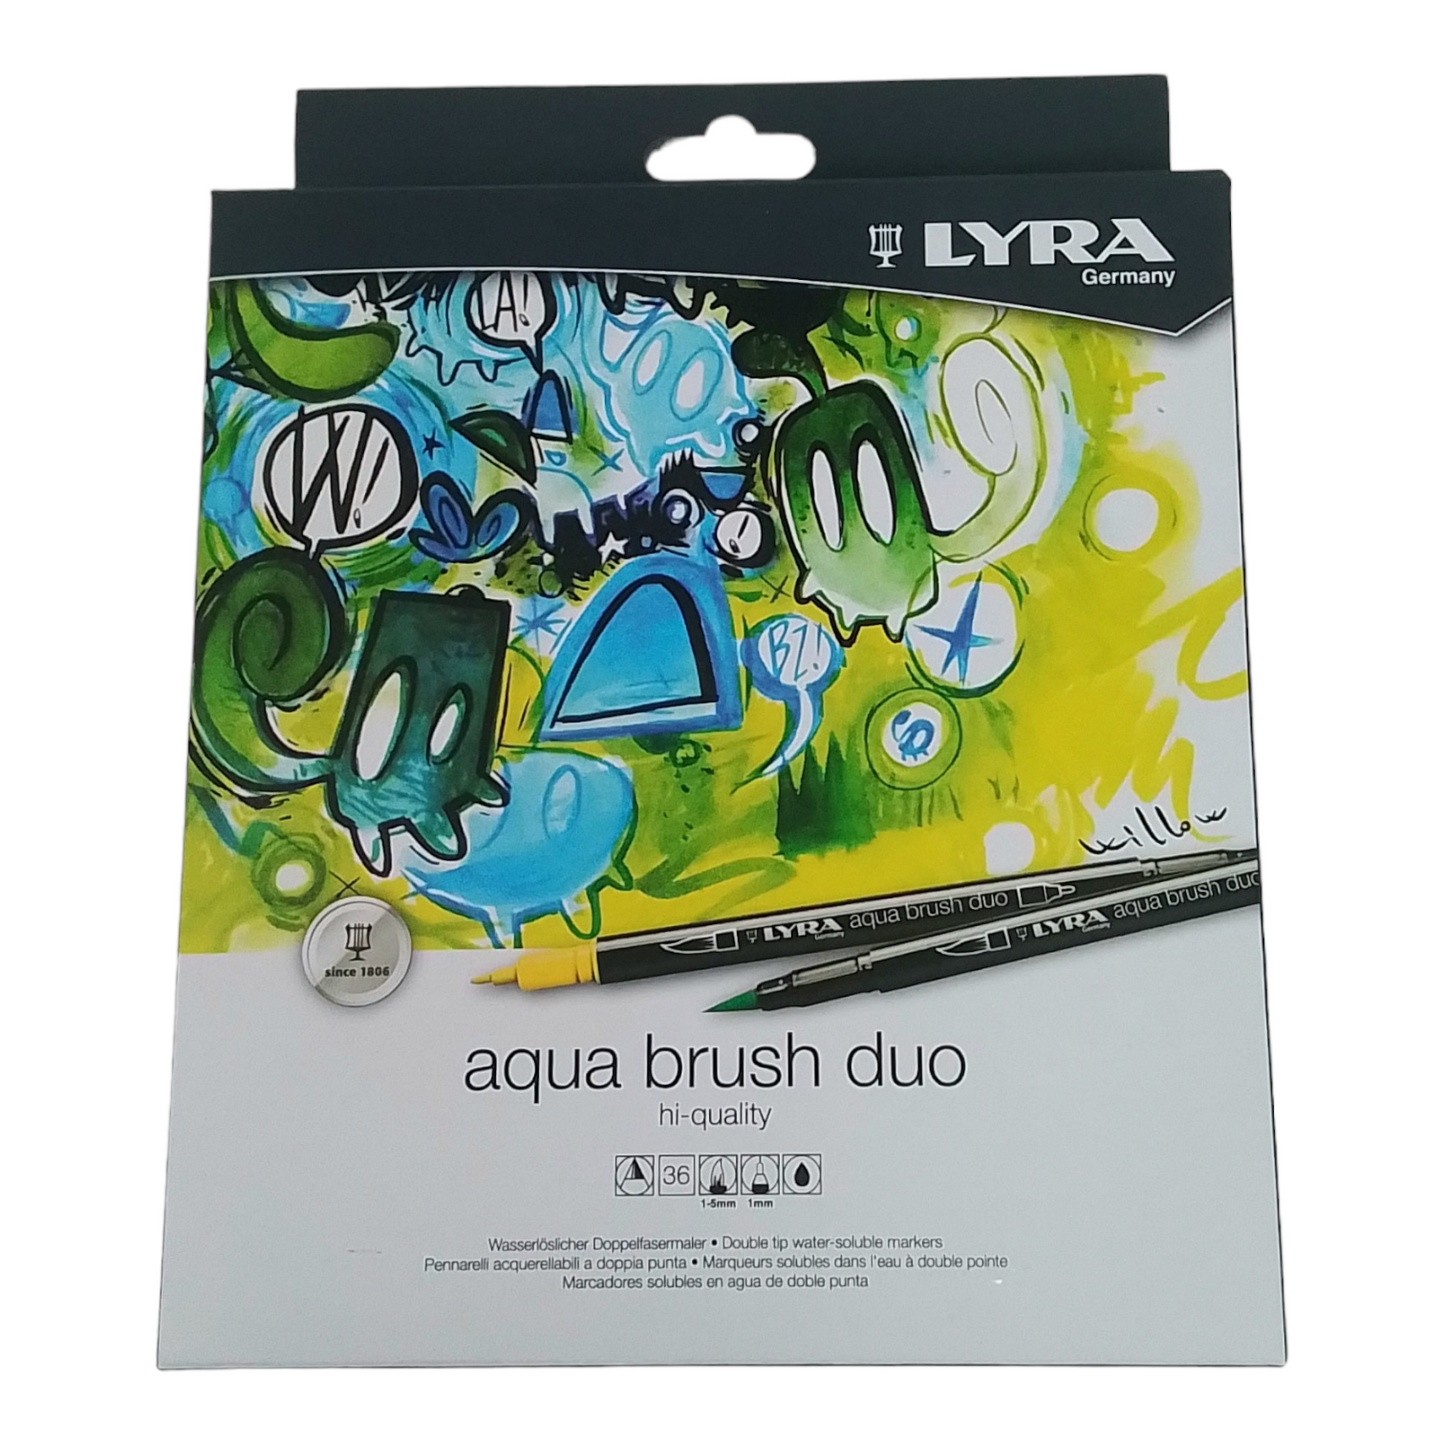 LYRA Aqua Brush Duo (Base Acqua)